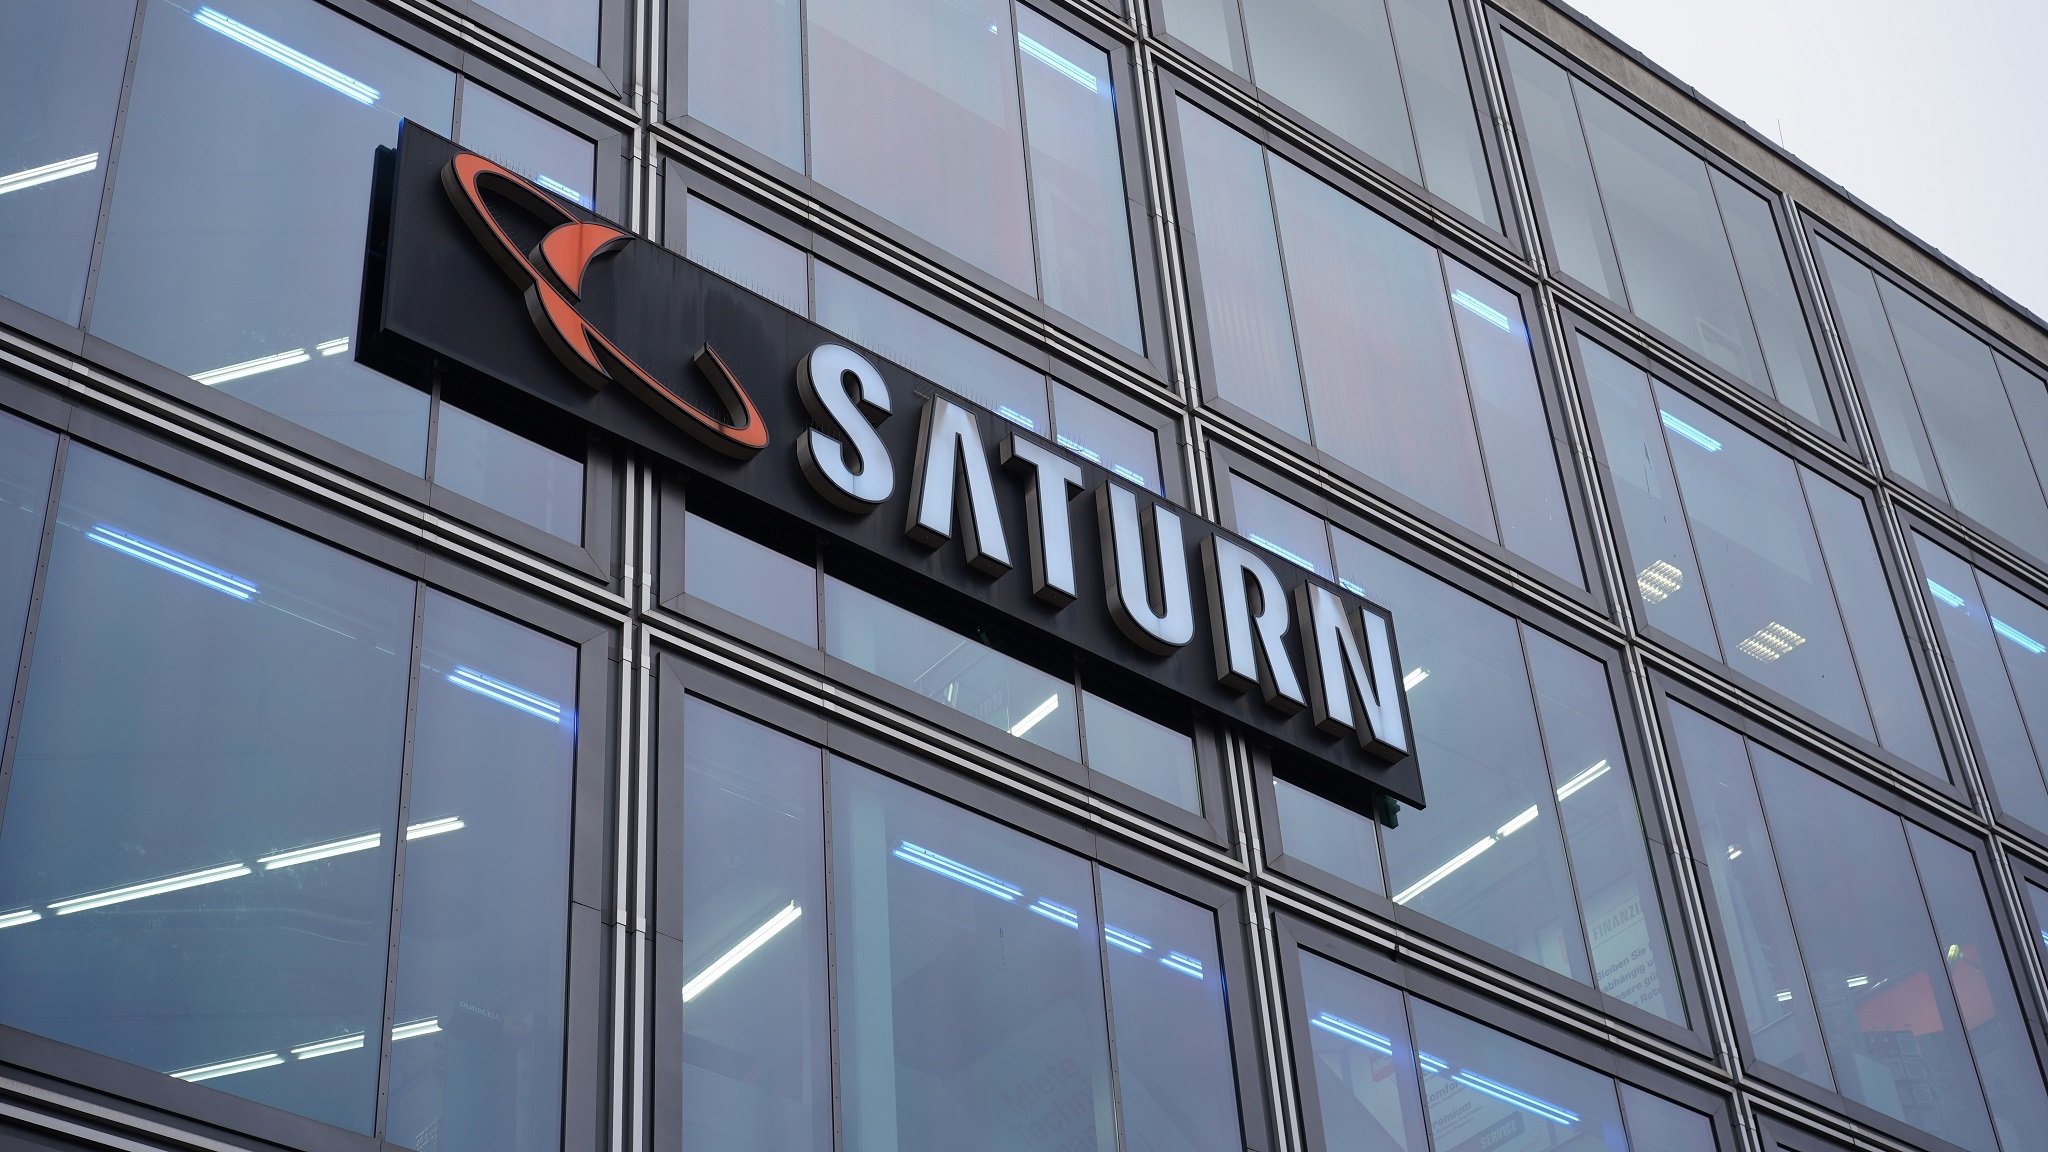 Saturn-Filiale am Alexanderplatz in Berlin